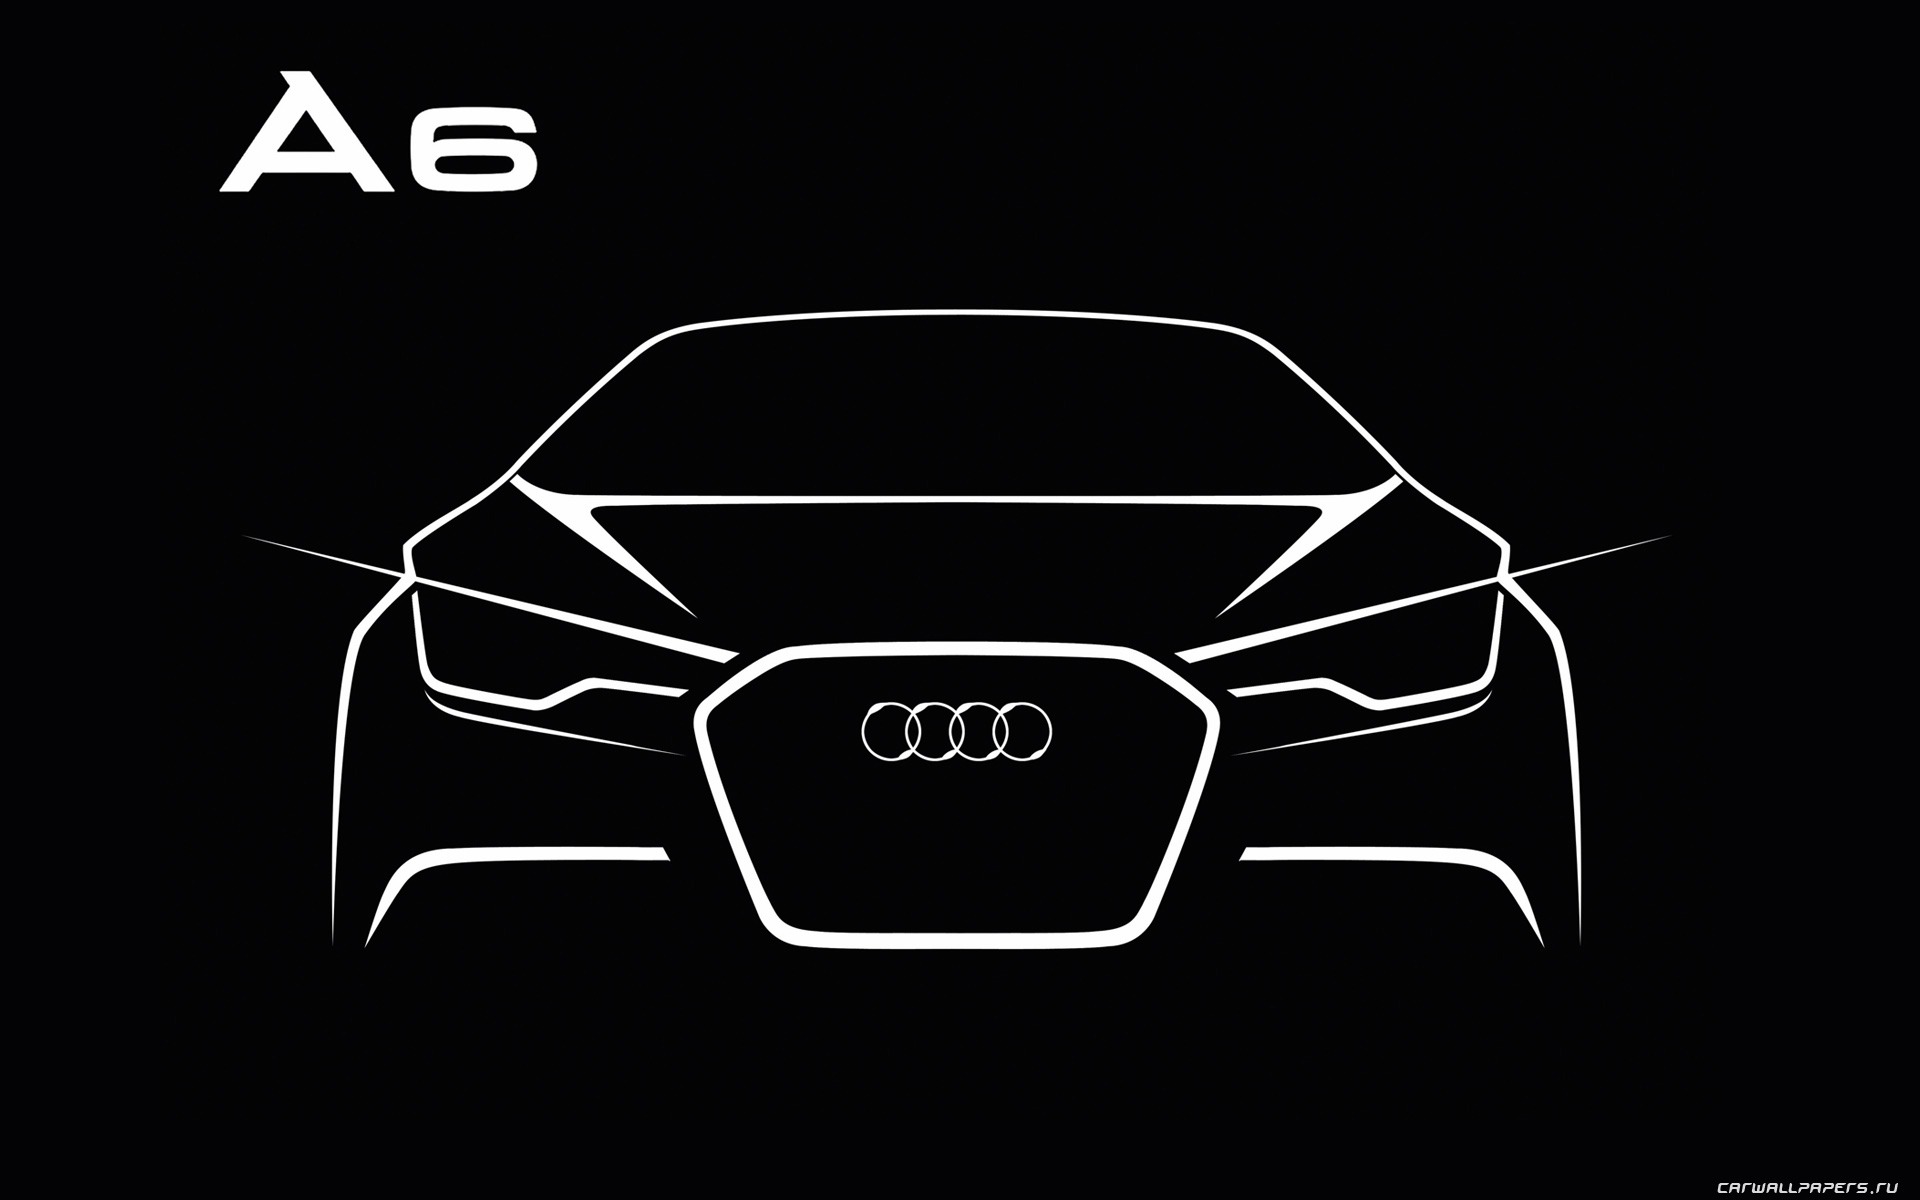 Audi A6 3.0 TDI quattro - 2011 奧迪 #28 - 1920x1200